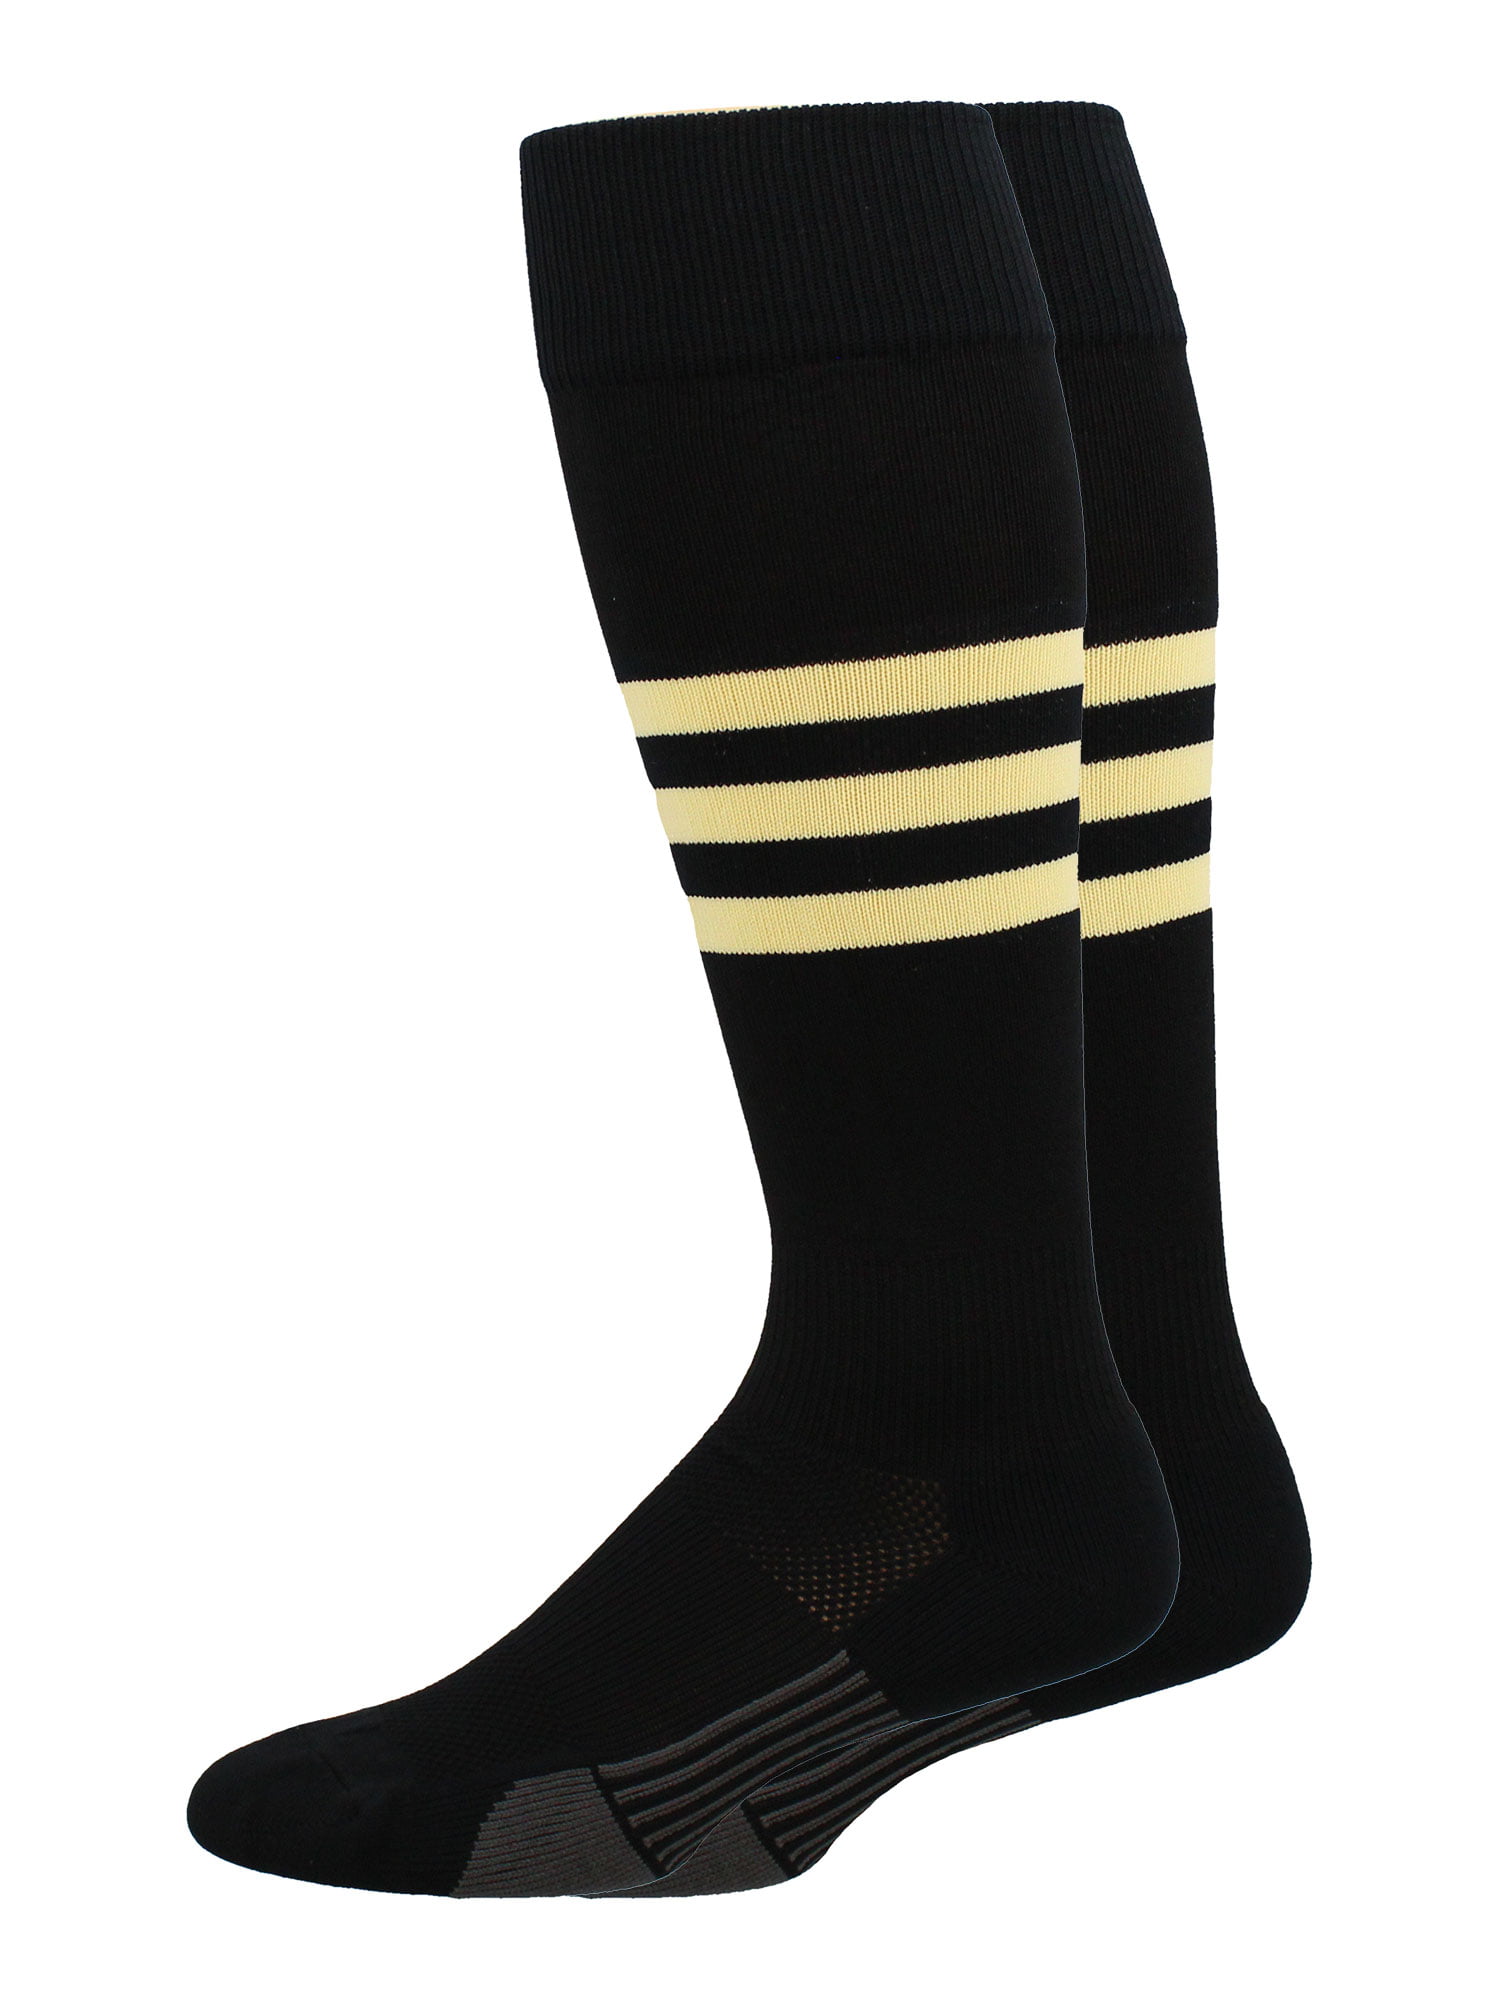 TCK - Dugout 3 Stripe Baseball Socks Pattern B (Black/Yellow, X-Large ...